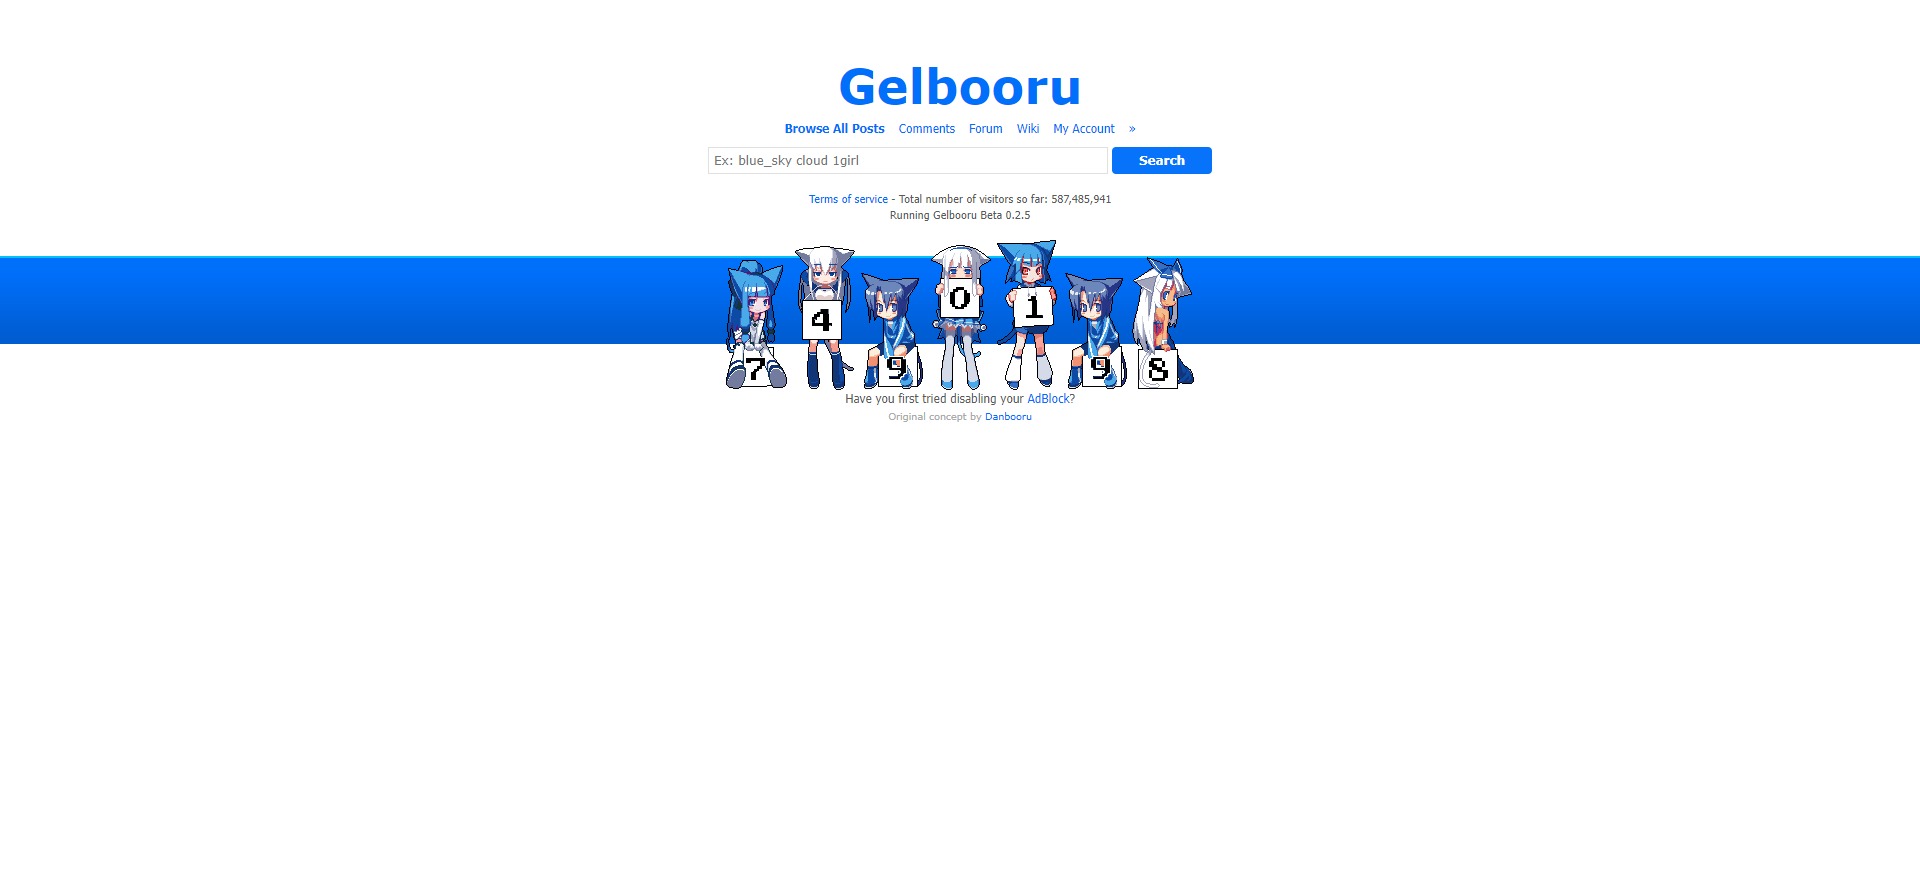 Gelbooru: Everything You Need to Know